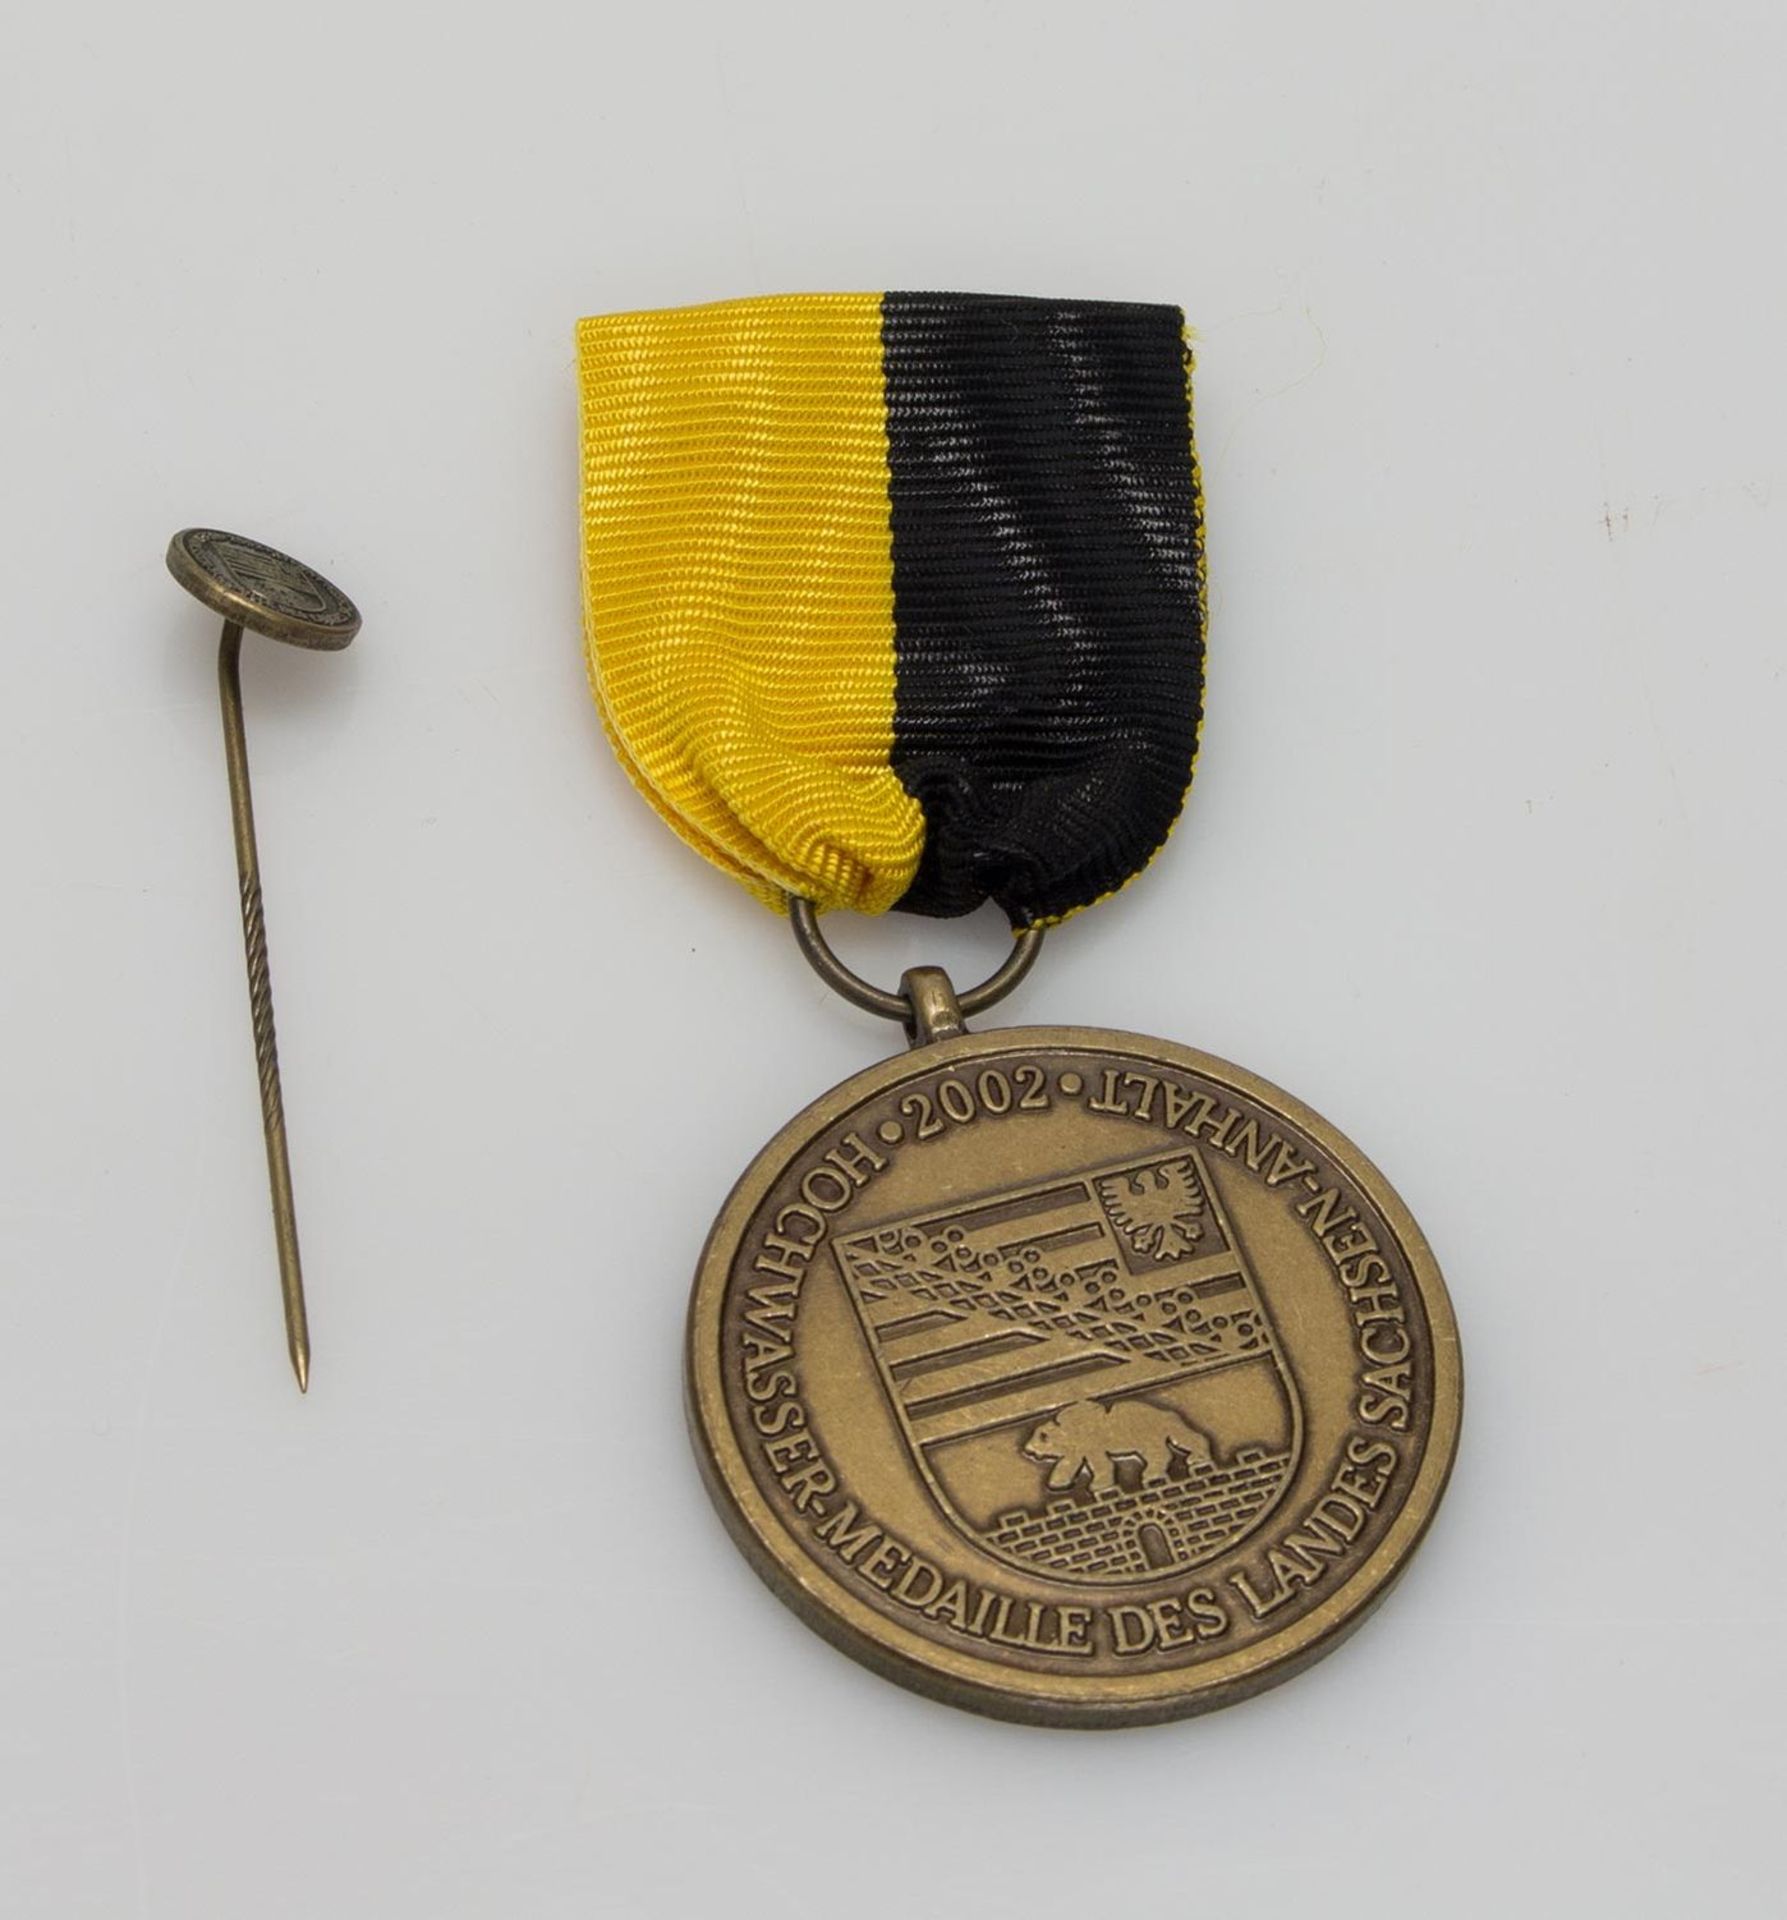 Hochwasser-Medaille - Image 3 of 3